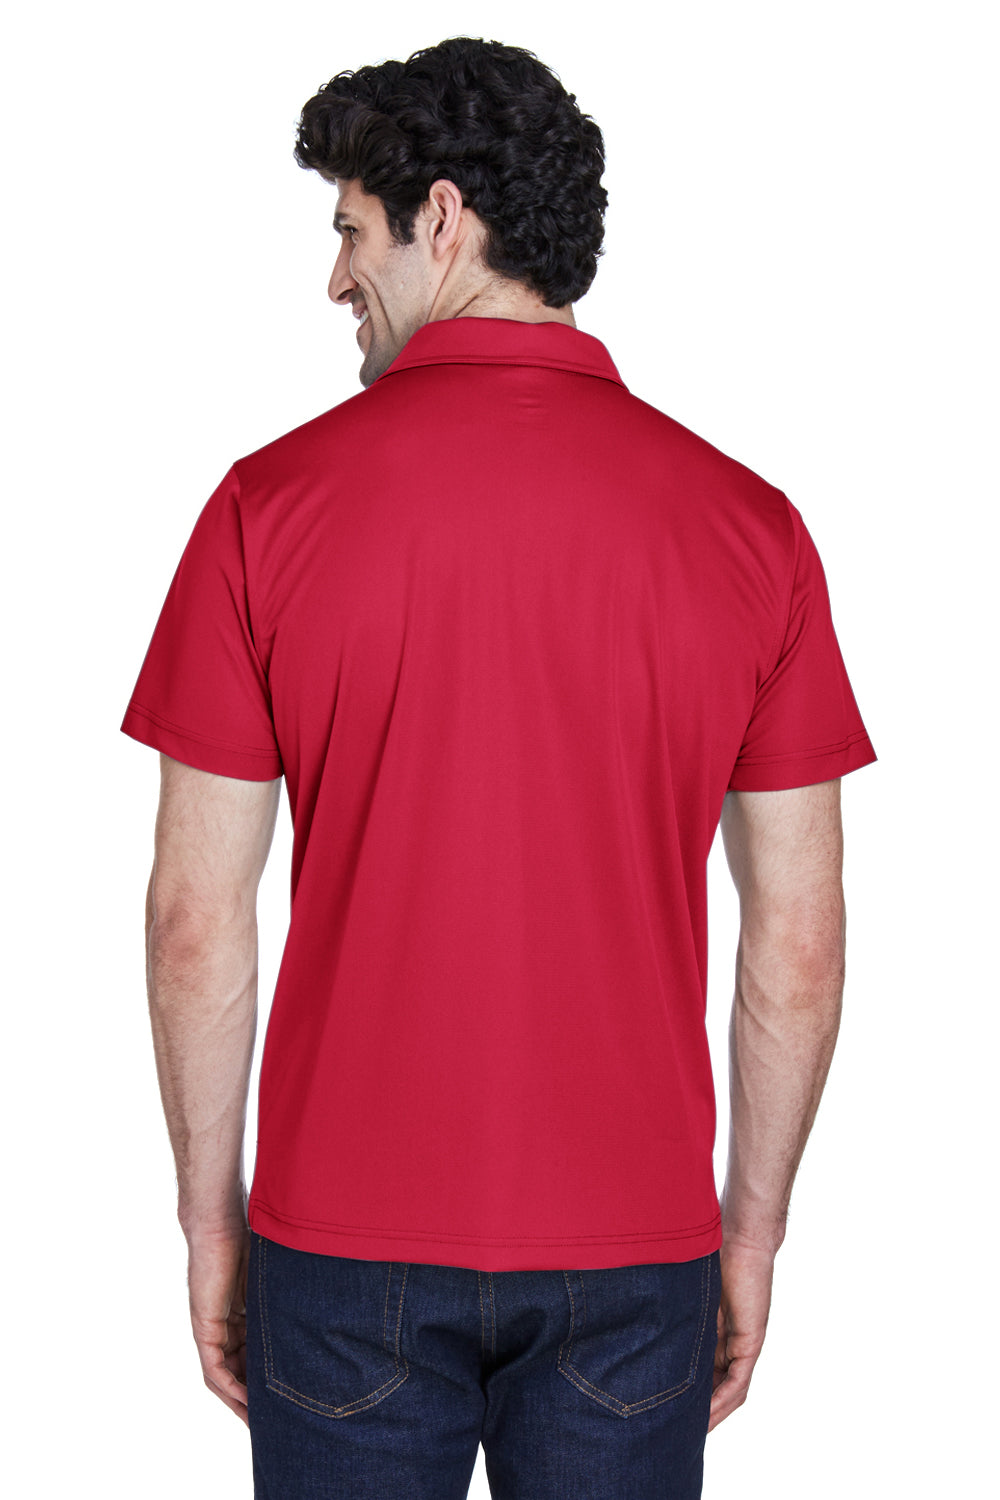 Team 365 TT21 Mens Command Performance Moisture Wicking Short Sleeve Polo Shirt Scarlet Red Back